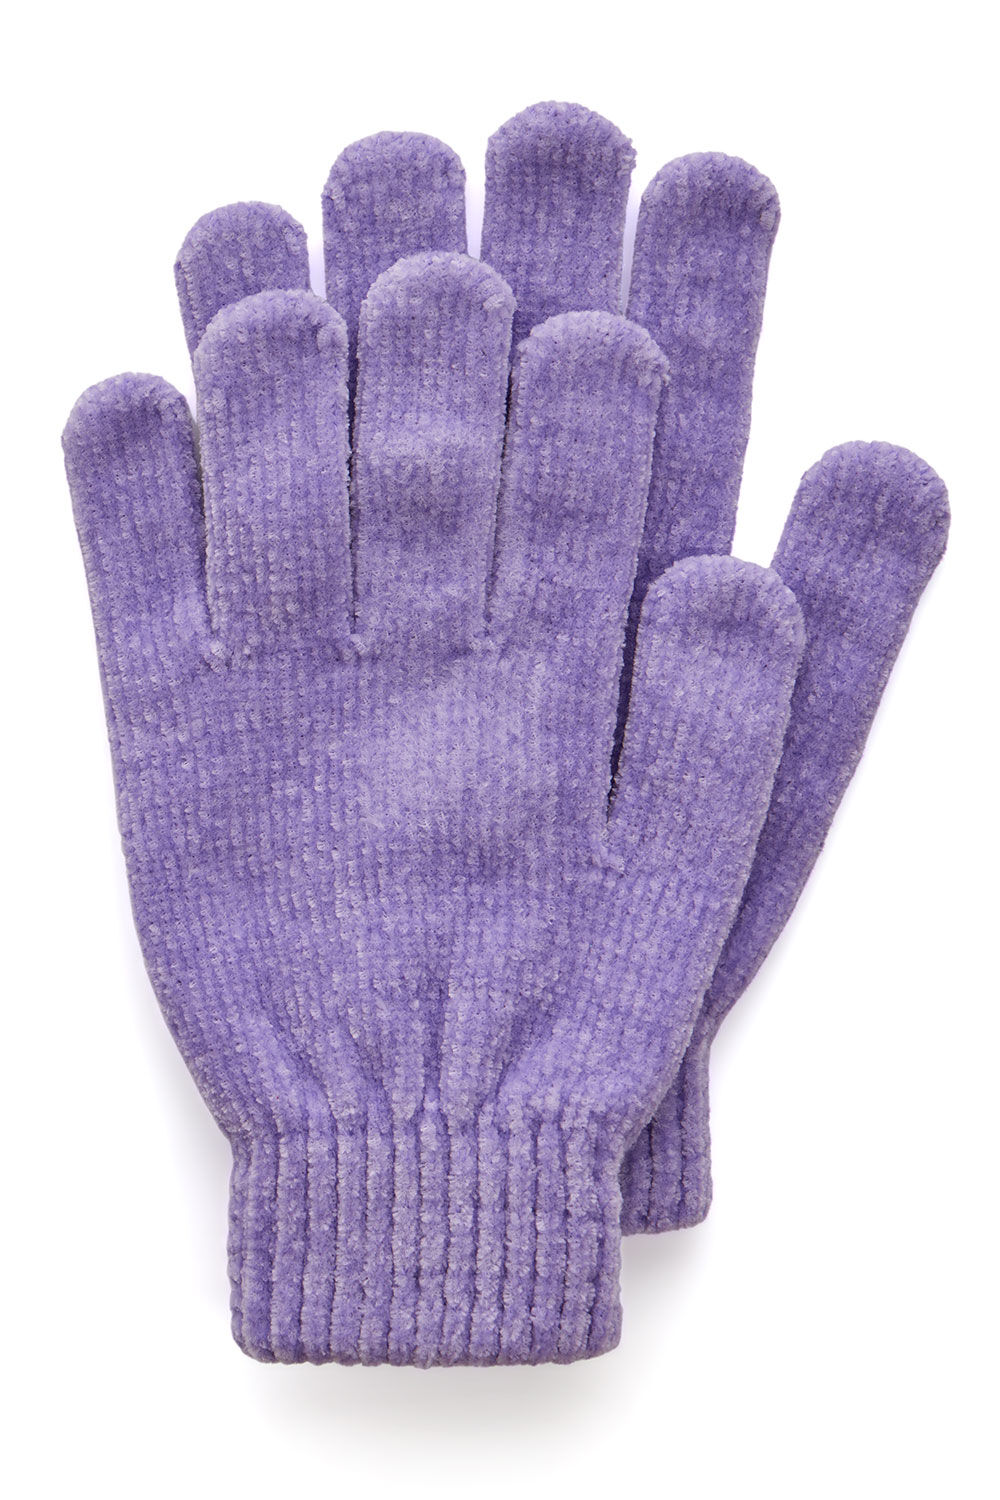 Bonmarche Purple Knitted Gloves